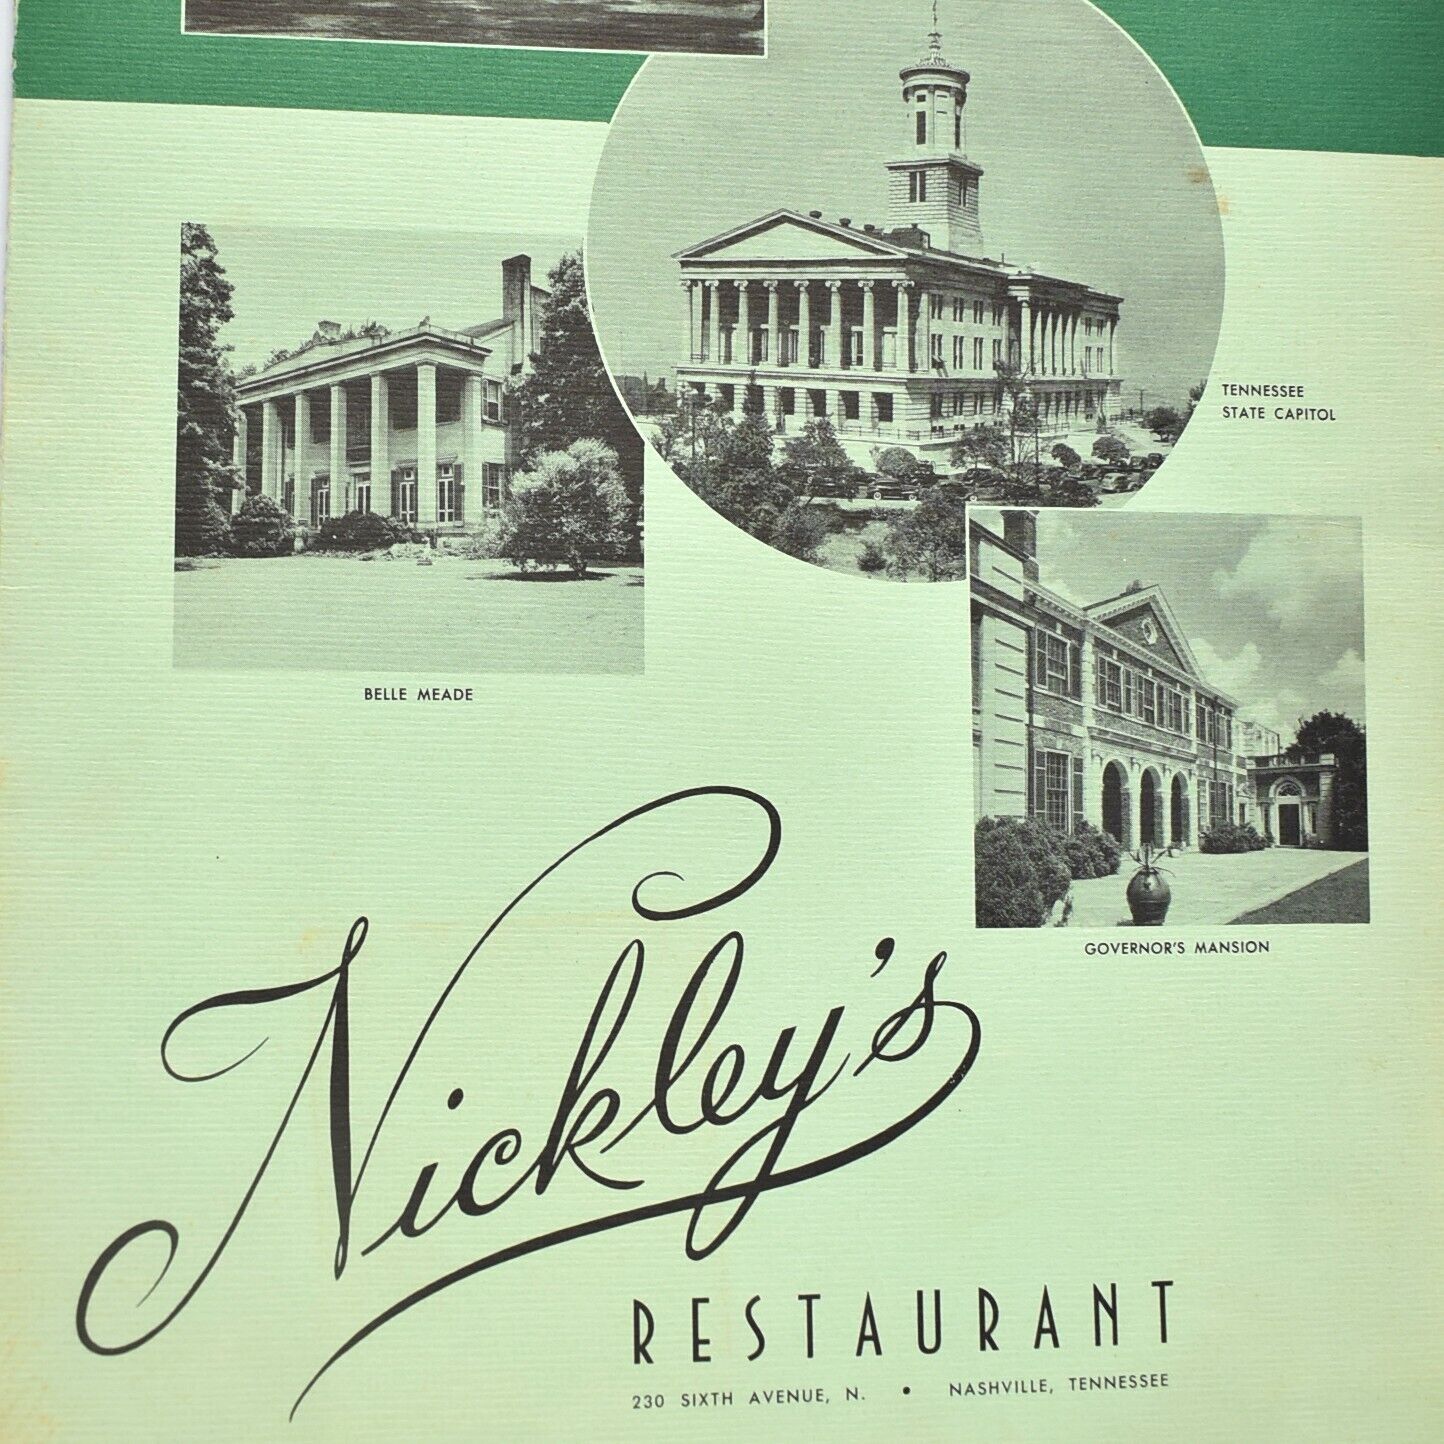 Vintage 1957 Nickley\'s Restaurant 230 Sixth Avenue North Nashville Tennessee